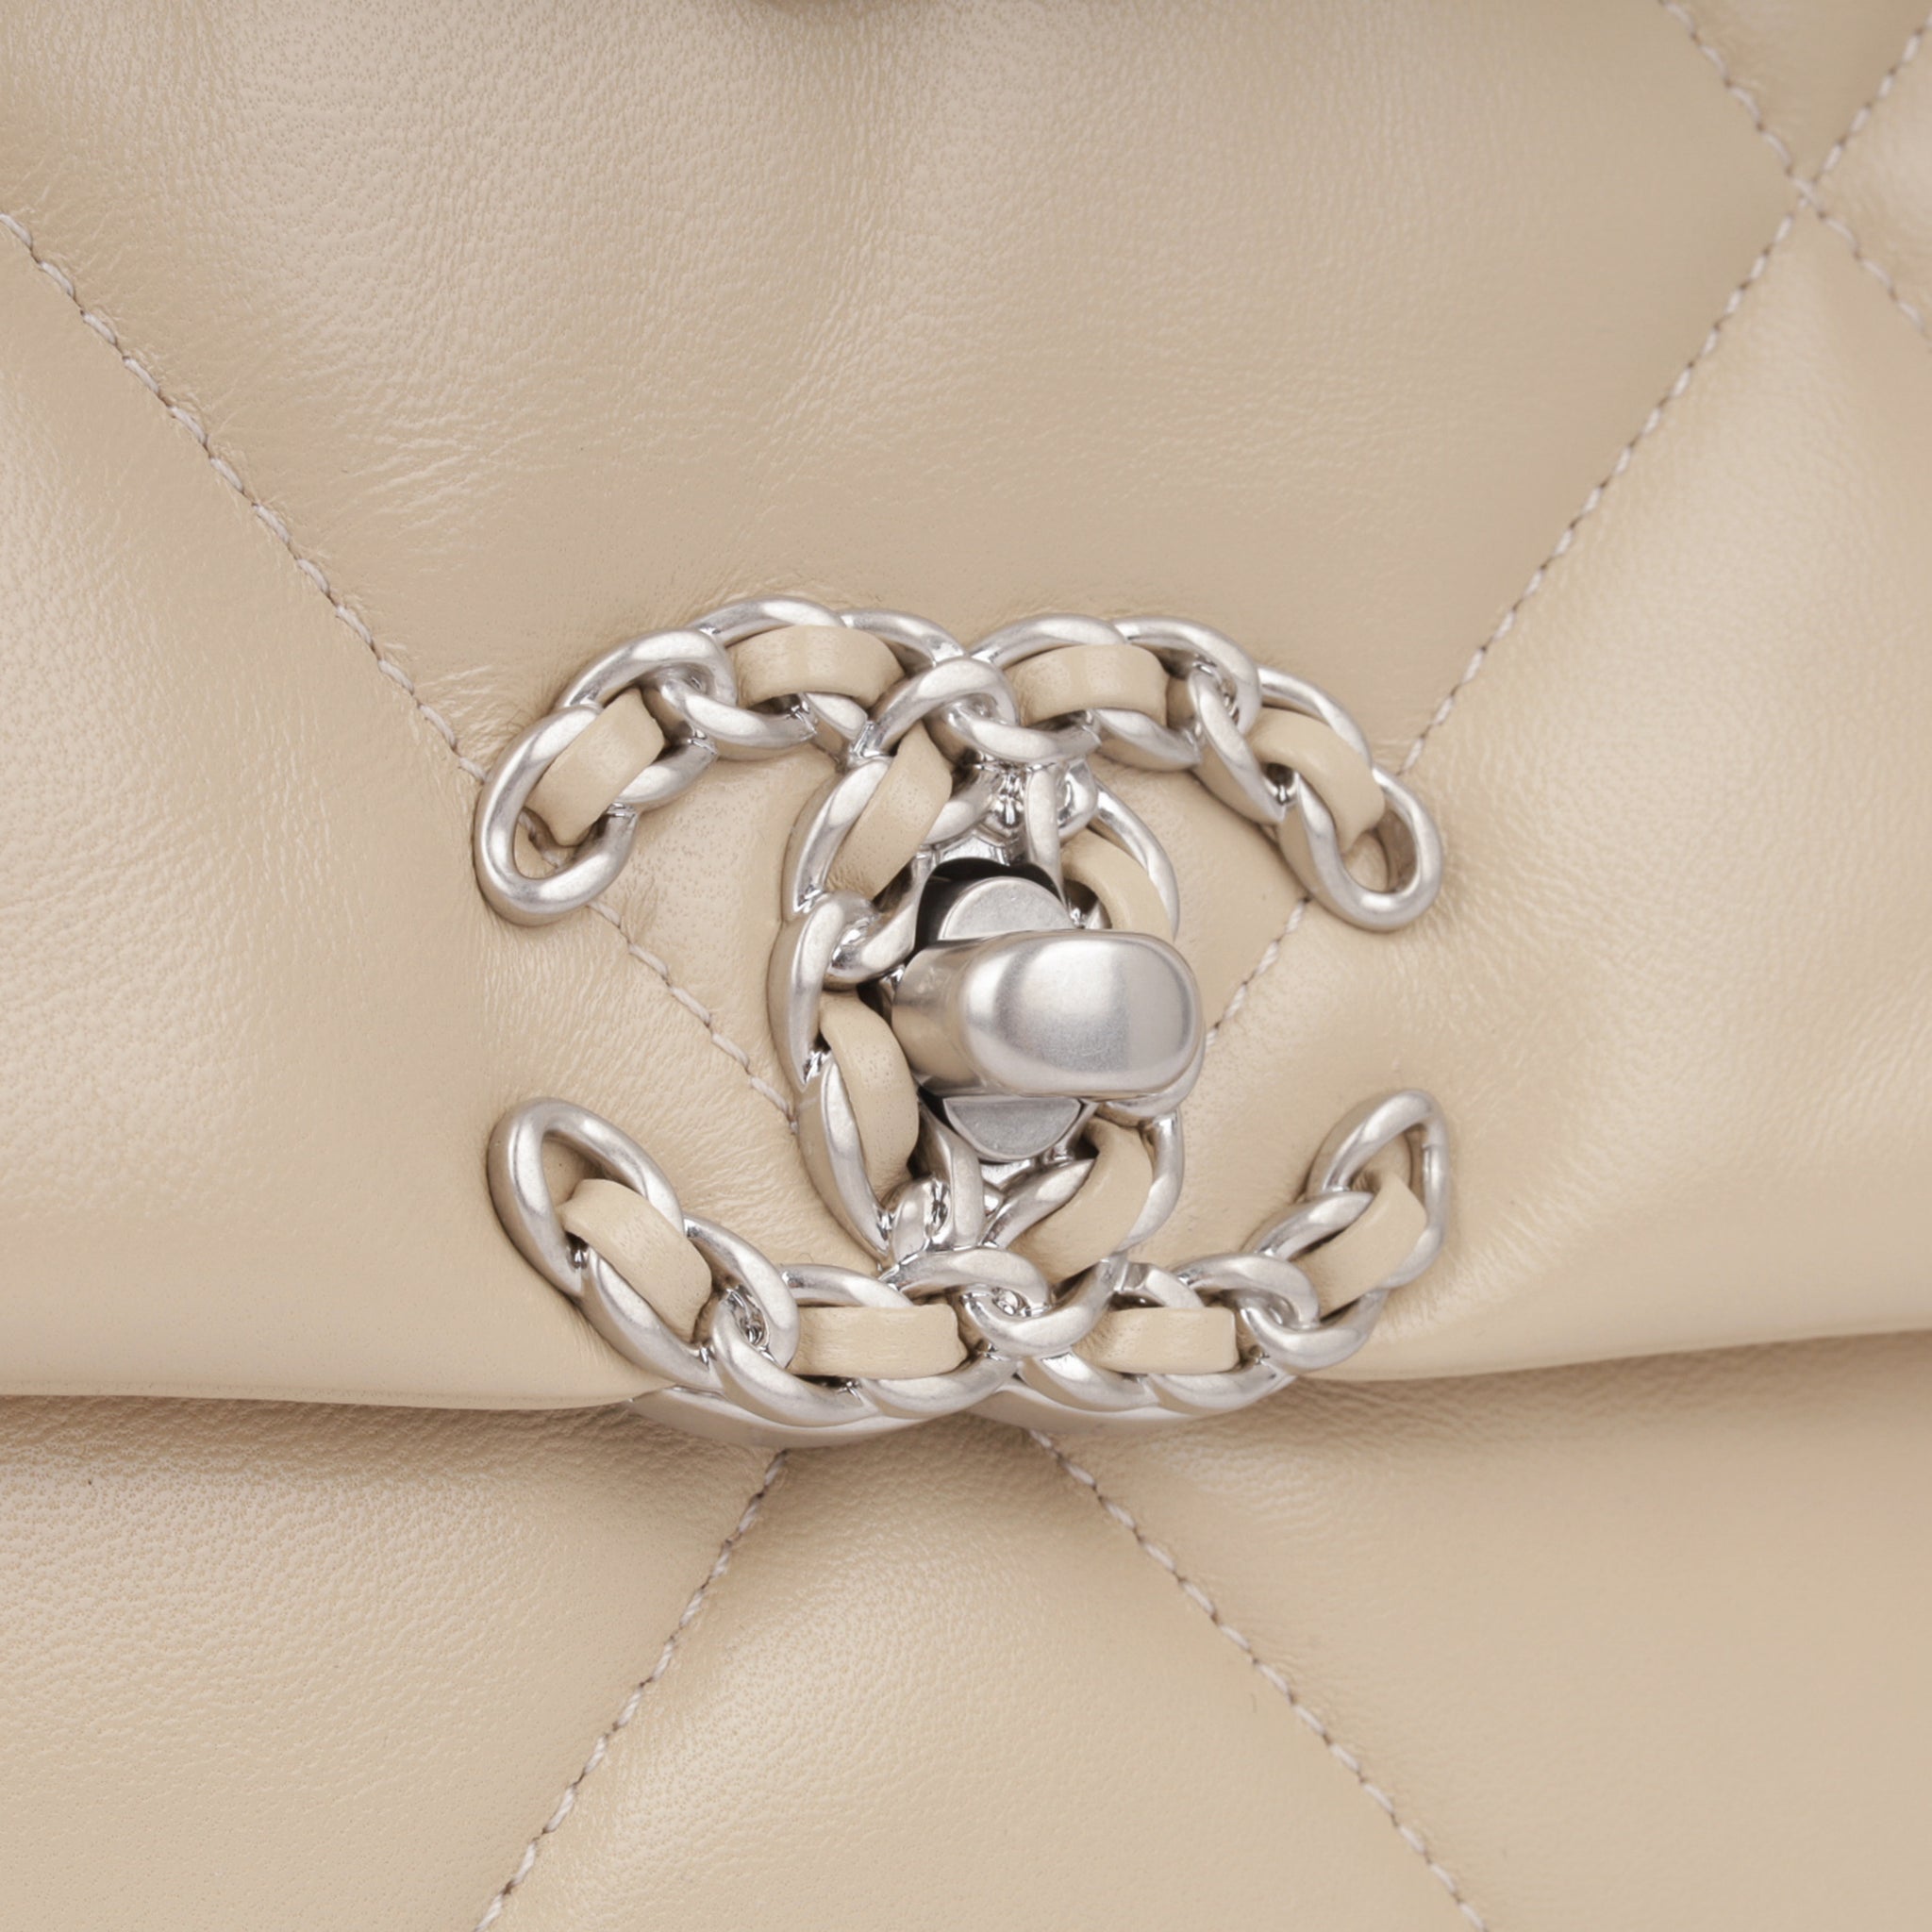 Chanel - Chanel 19 Flap Bag - Small - Beige Goatskin - SHW - Immaculate